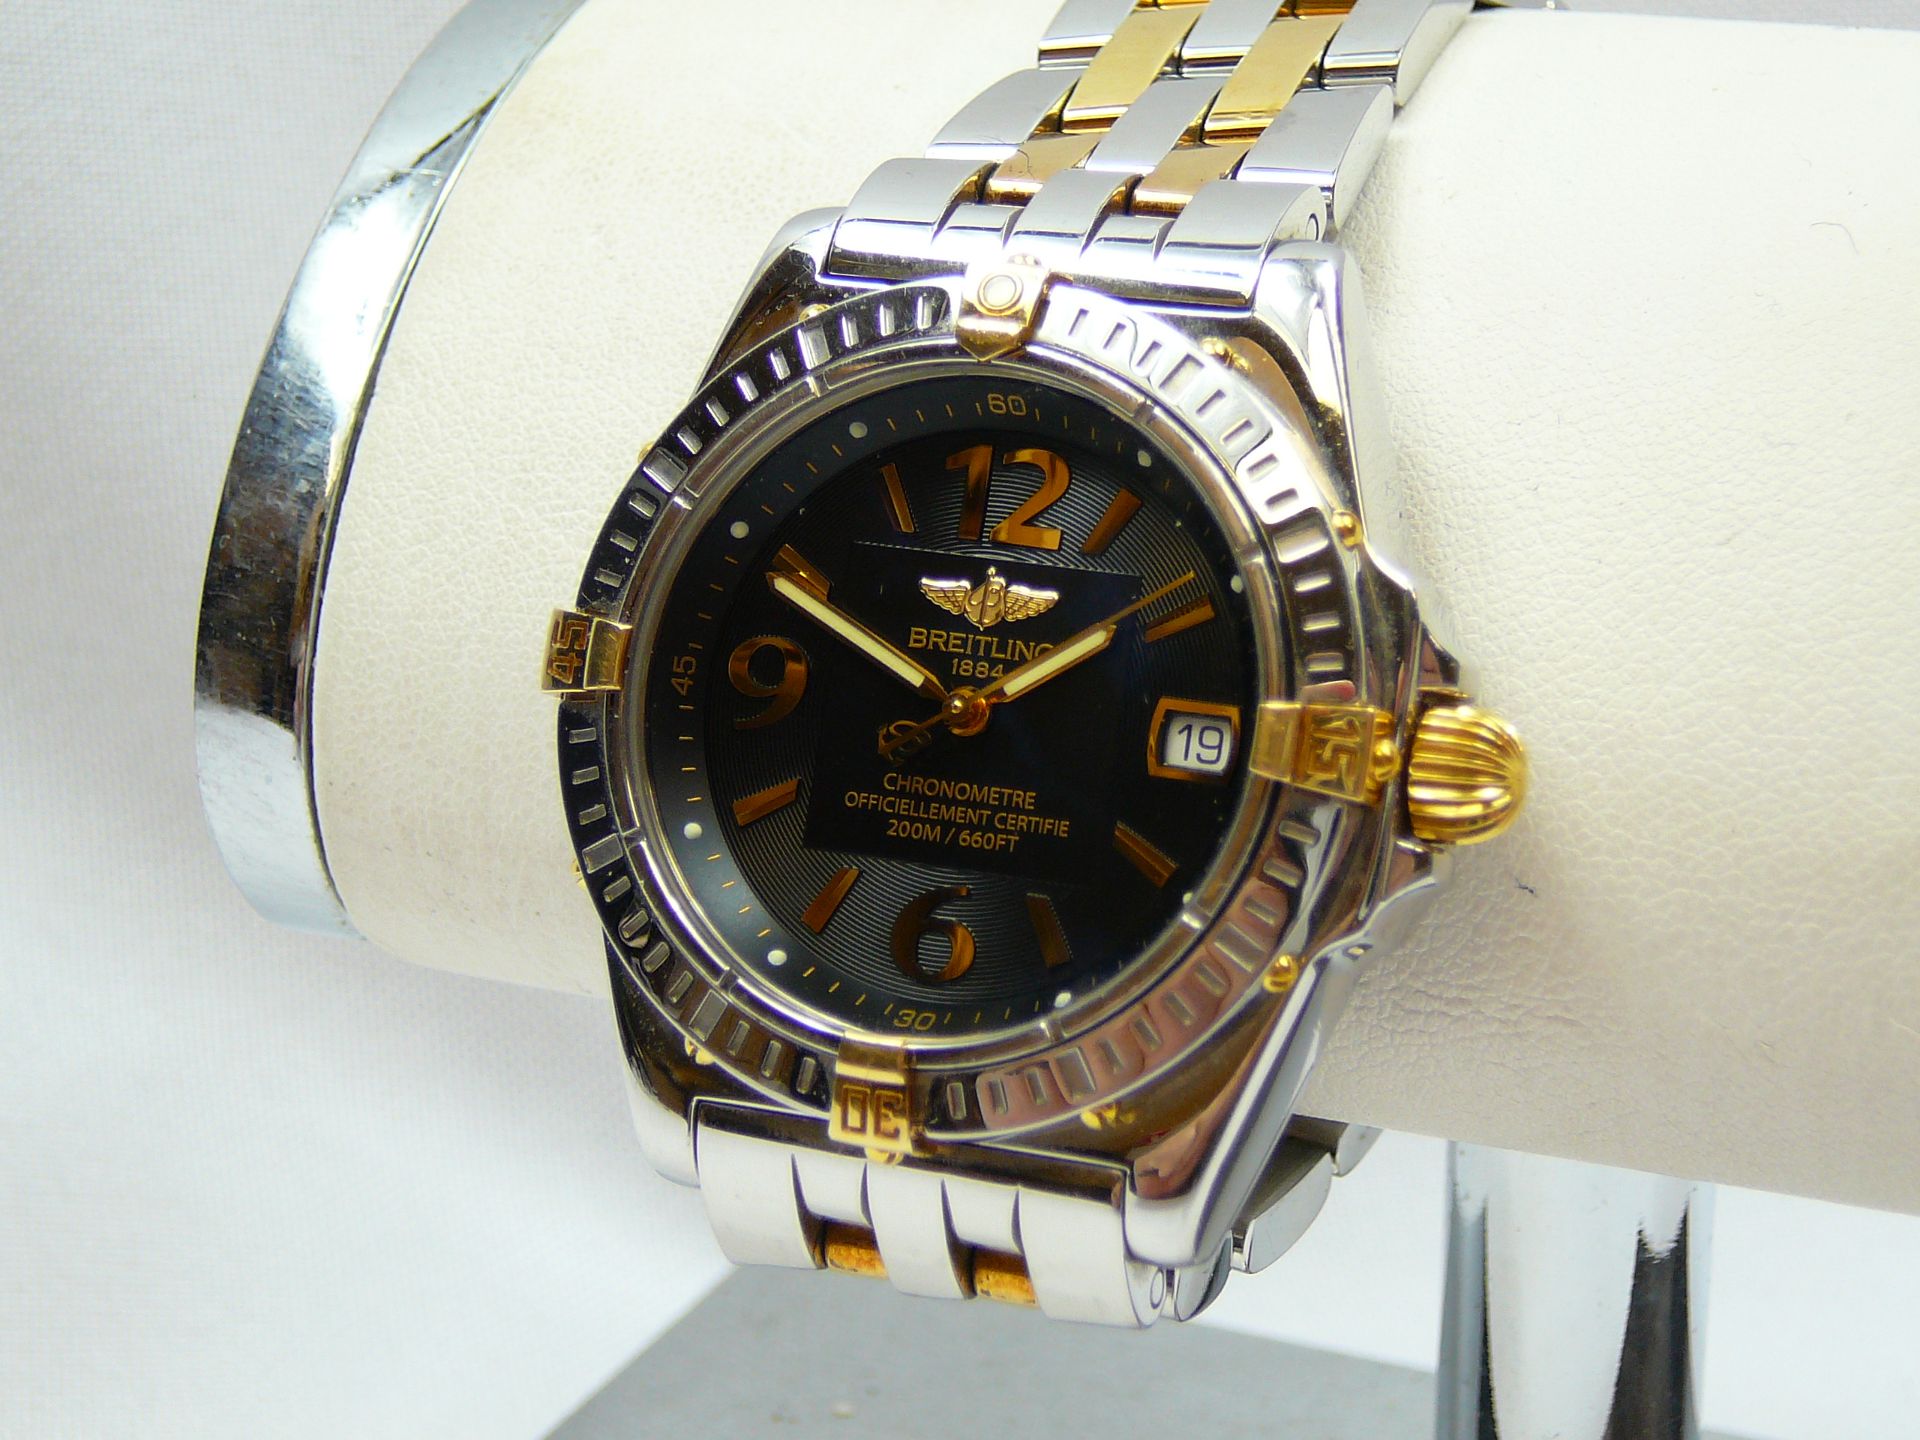 Ladies Breitling Wristwatch - Image 2 of 3